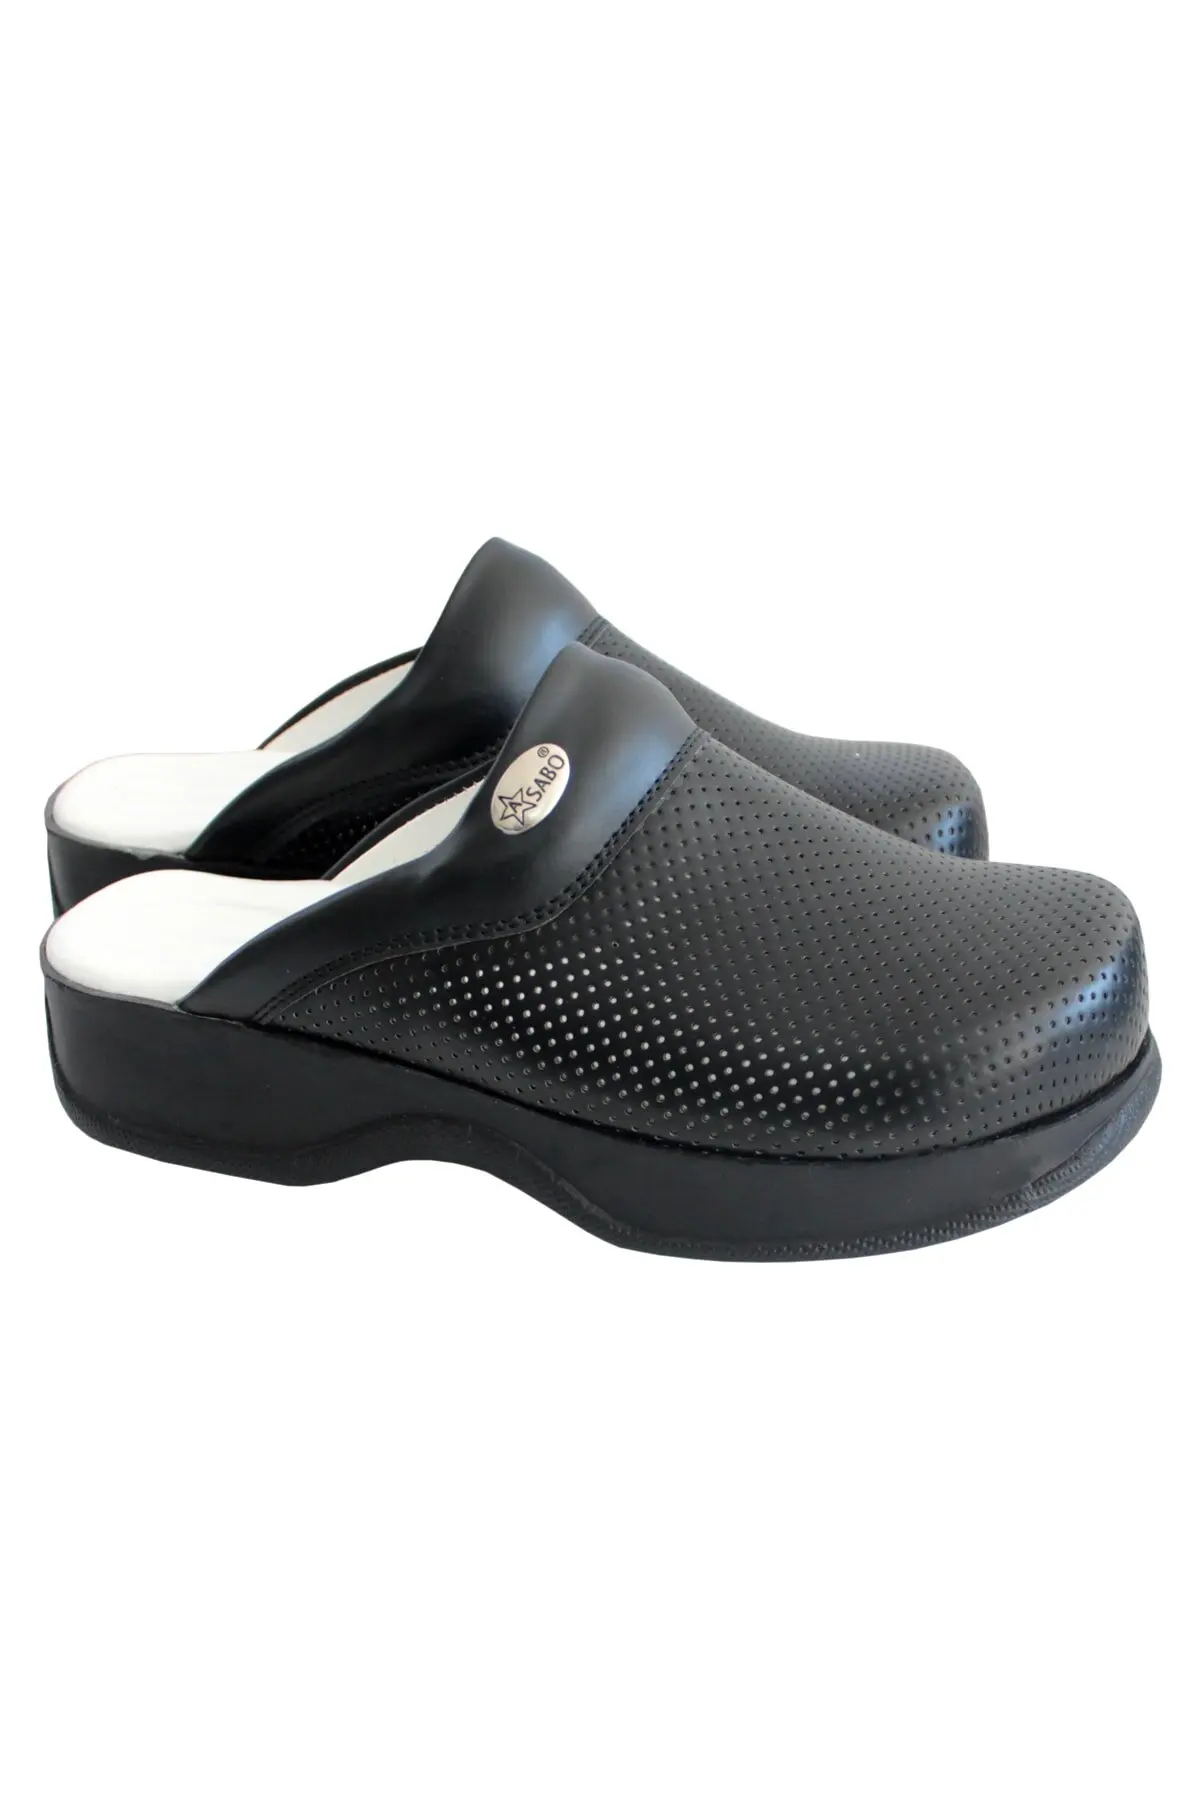 

Black Dr Sabo Nurse Doctor Slippers, 2023 New Orthopedic Sabo Men Sandals, Hospital Medical Casual Quality Soft Anti-Slip Clogs